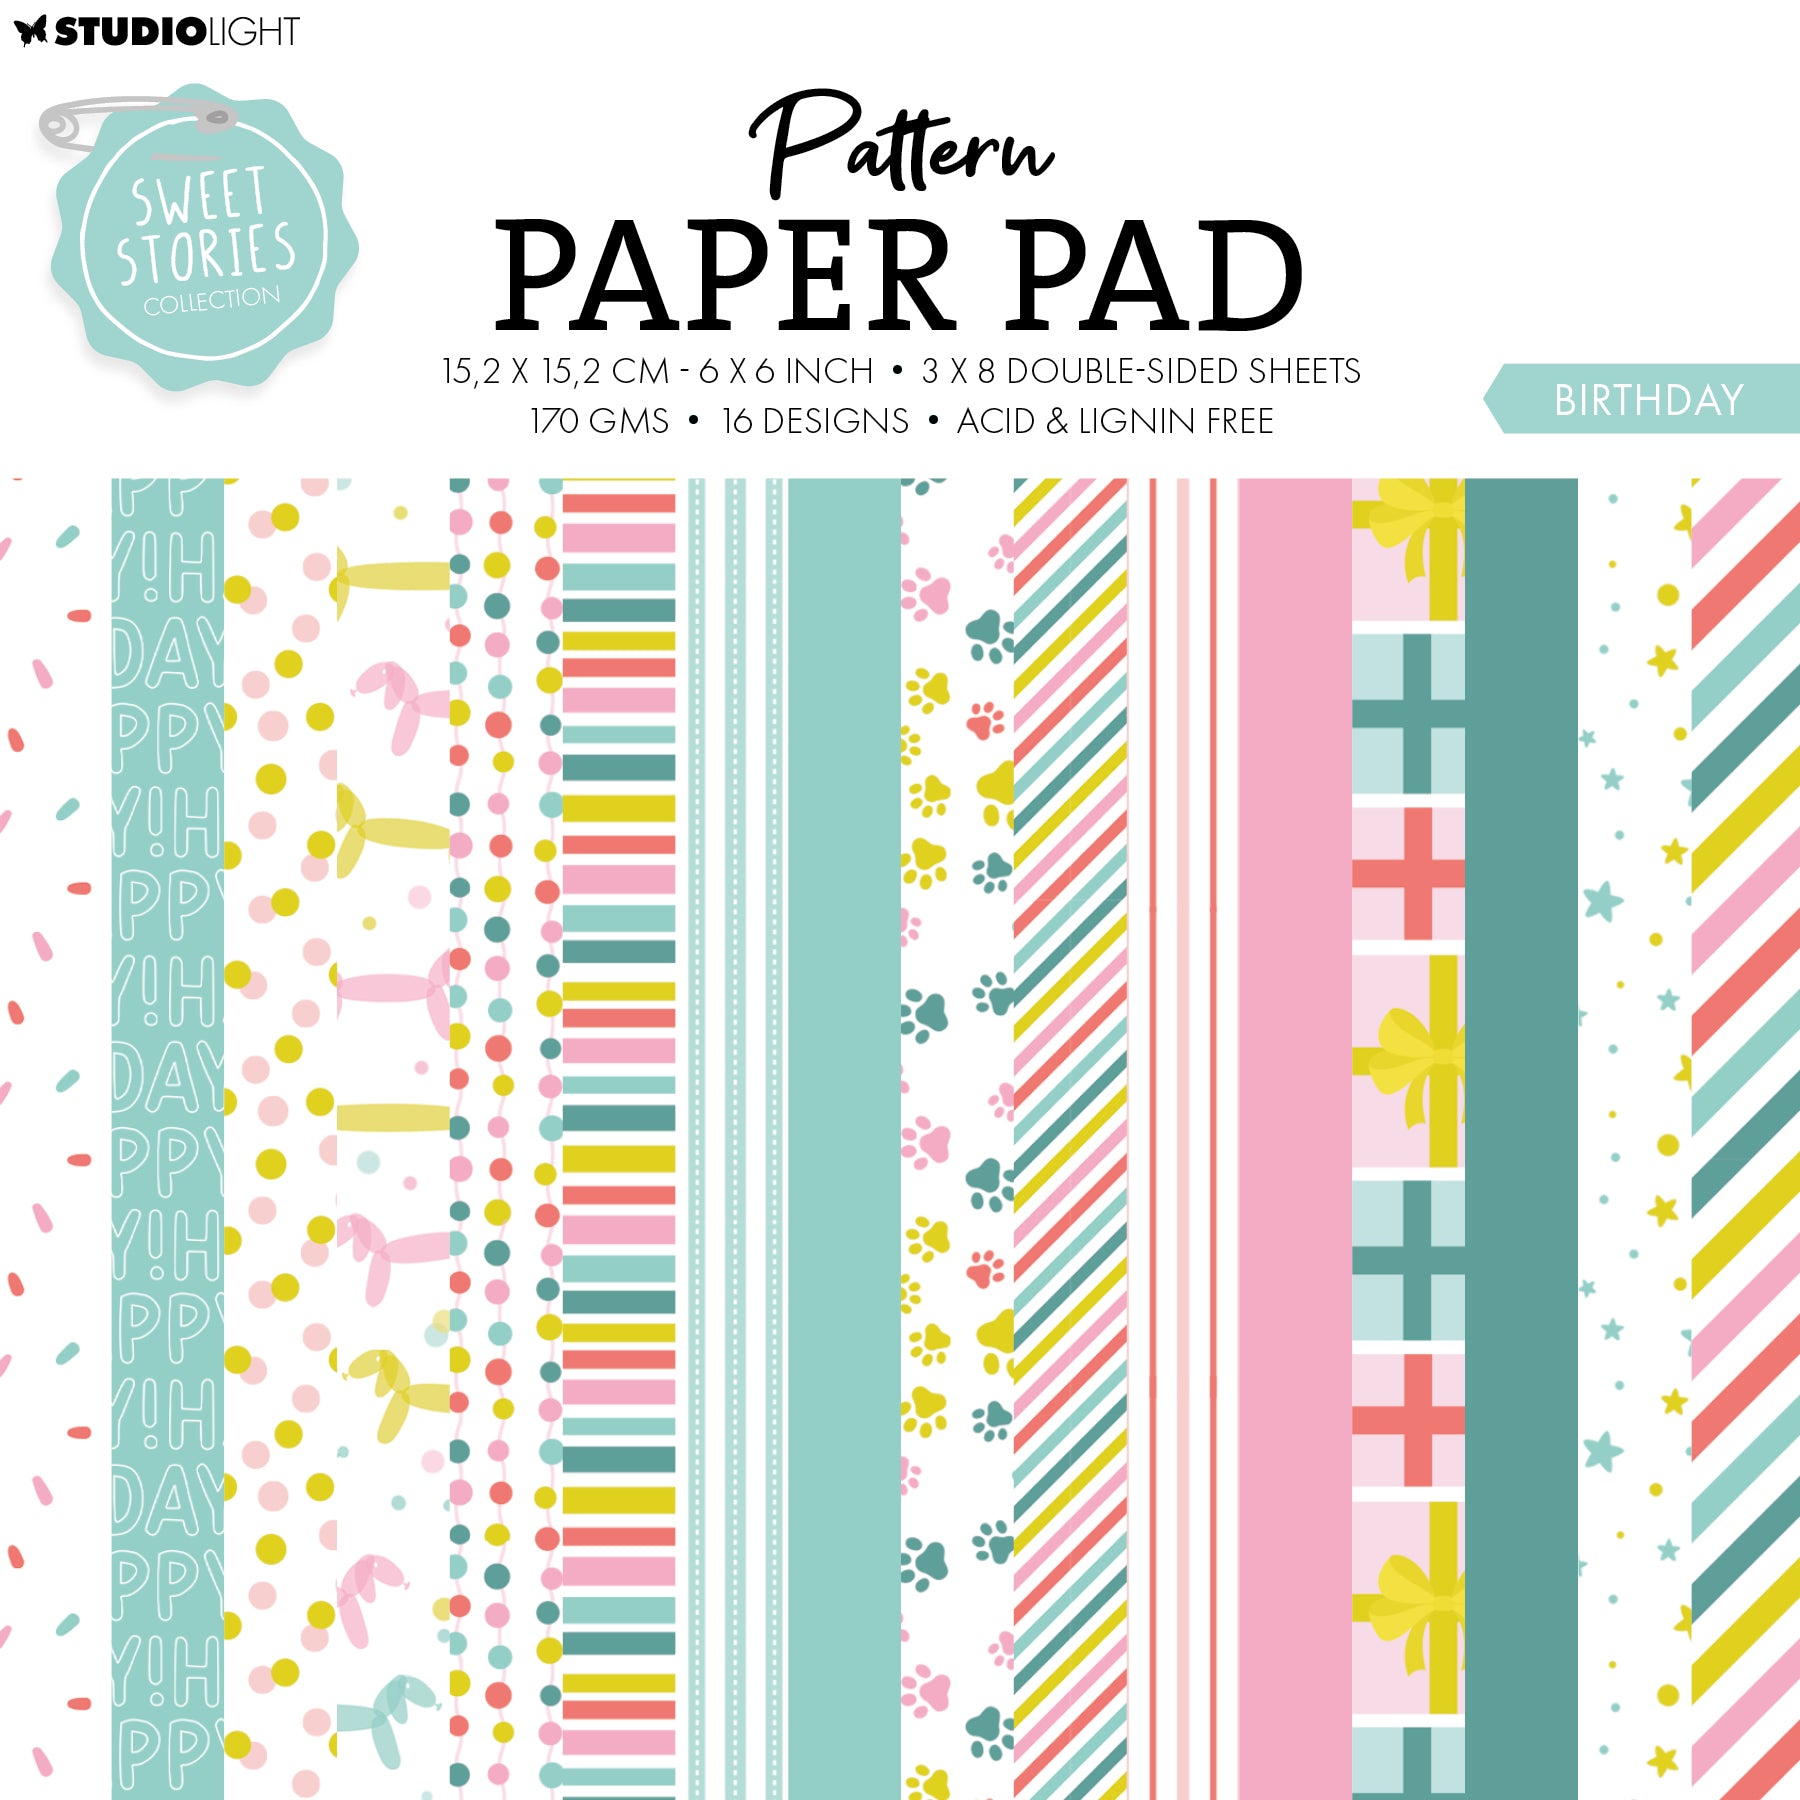 SL Pattern Paper Pad Birthday Sweet Stories 24 SH